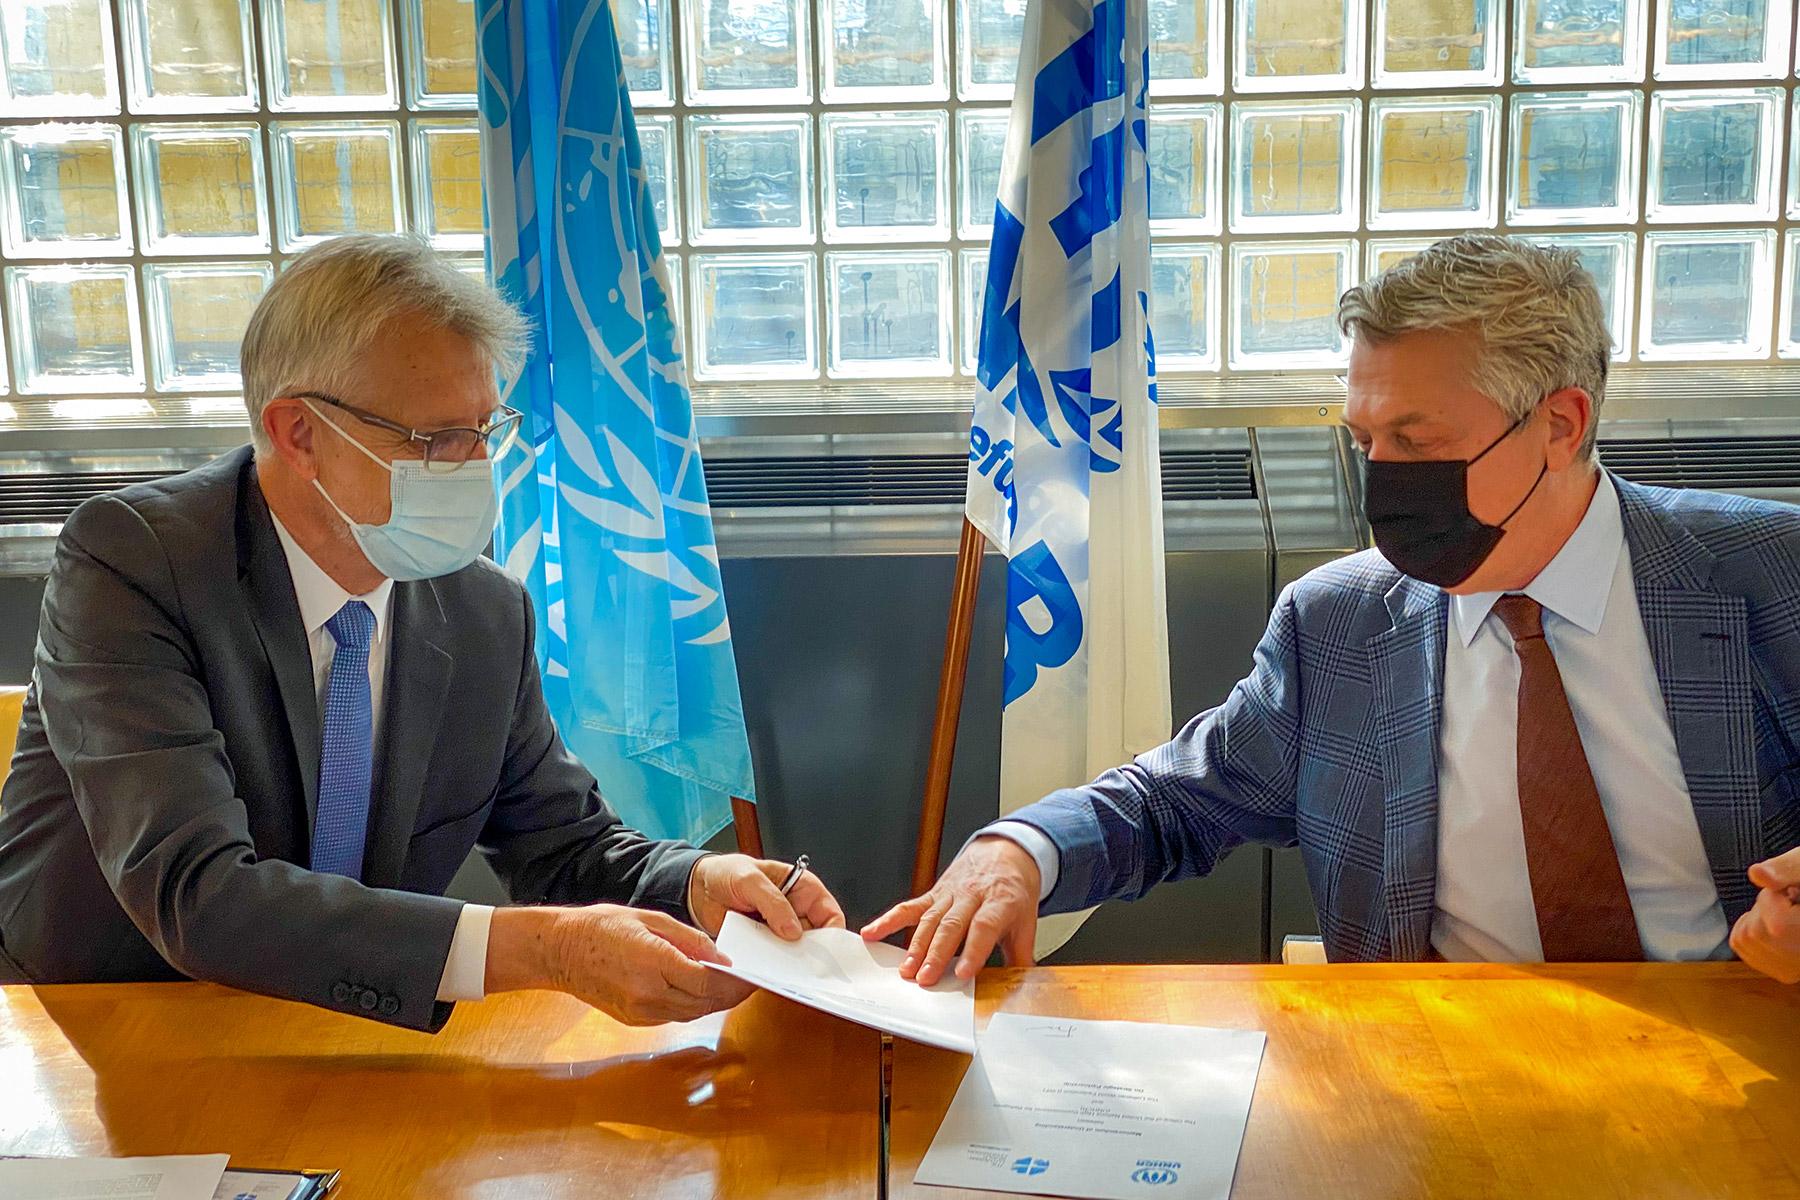 LWF General Secretary Rev. Dr Martin Junge and Mr. Filippo Grandi, UN High Commissioner for Refugees, signed the Memorandum of Understanding. Photo: LWF/A. Danielsson